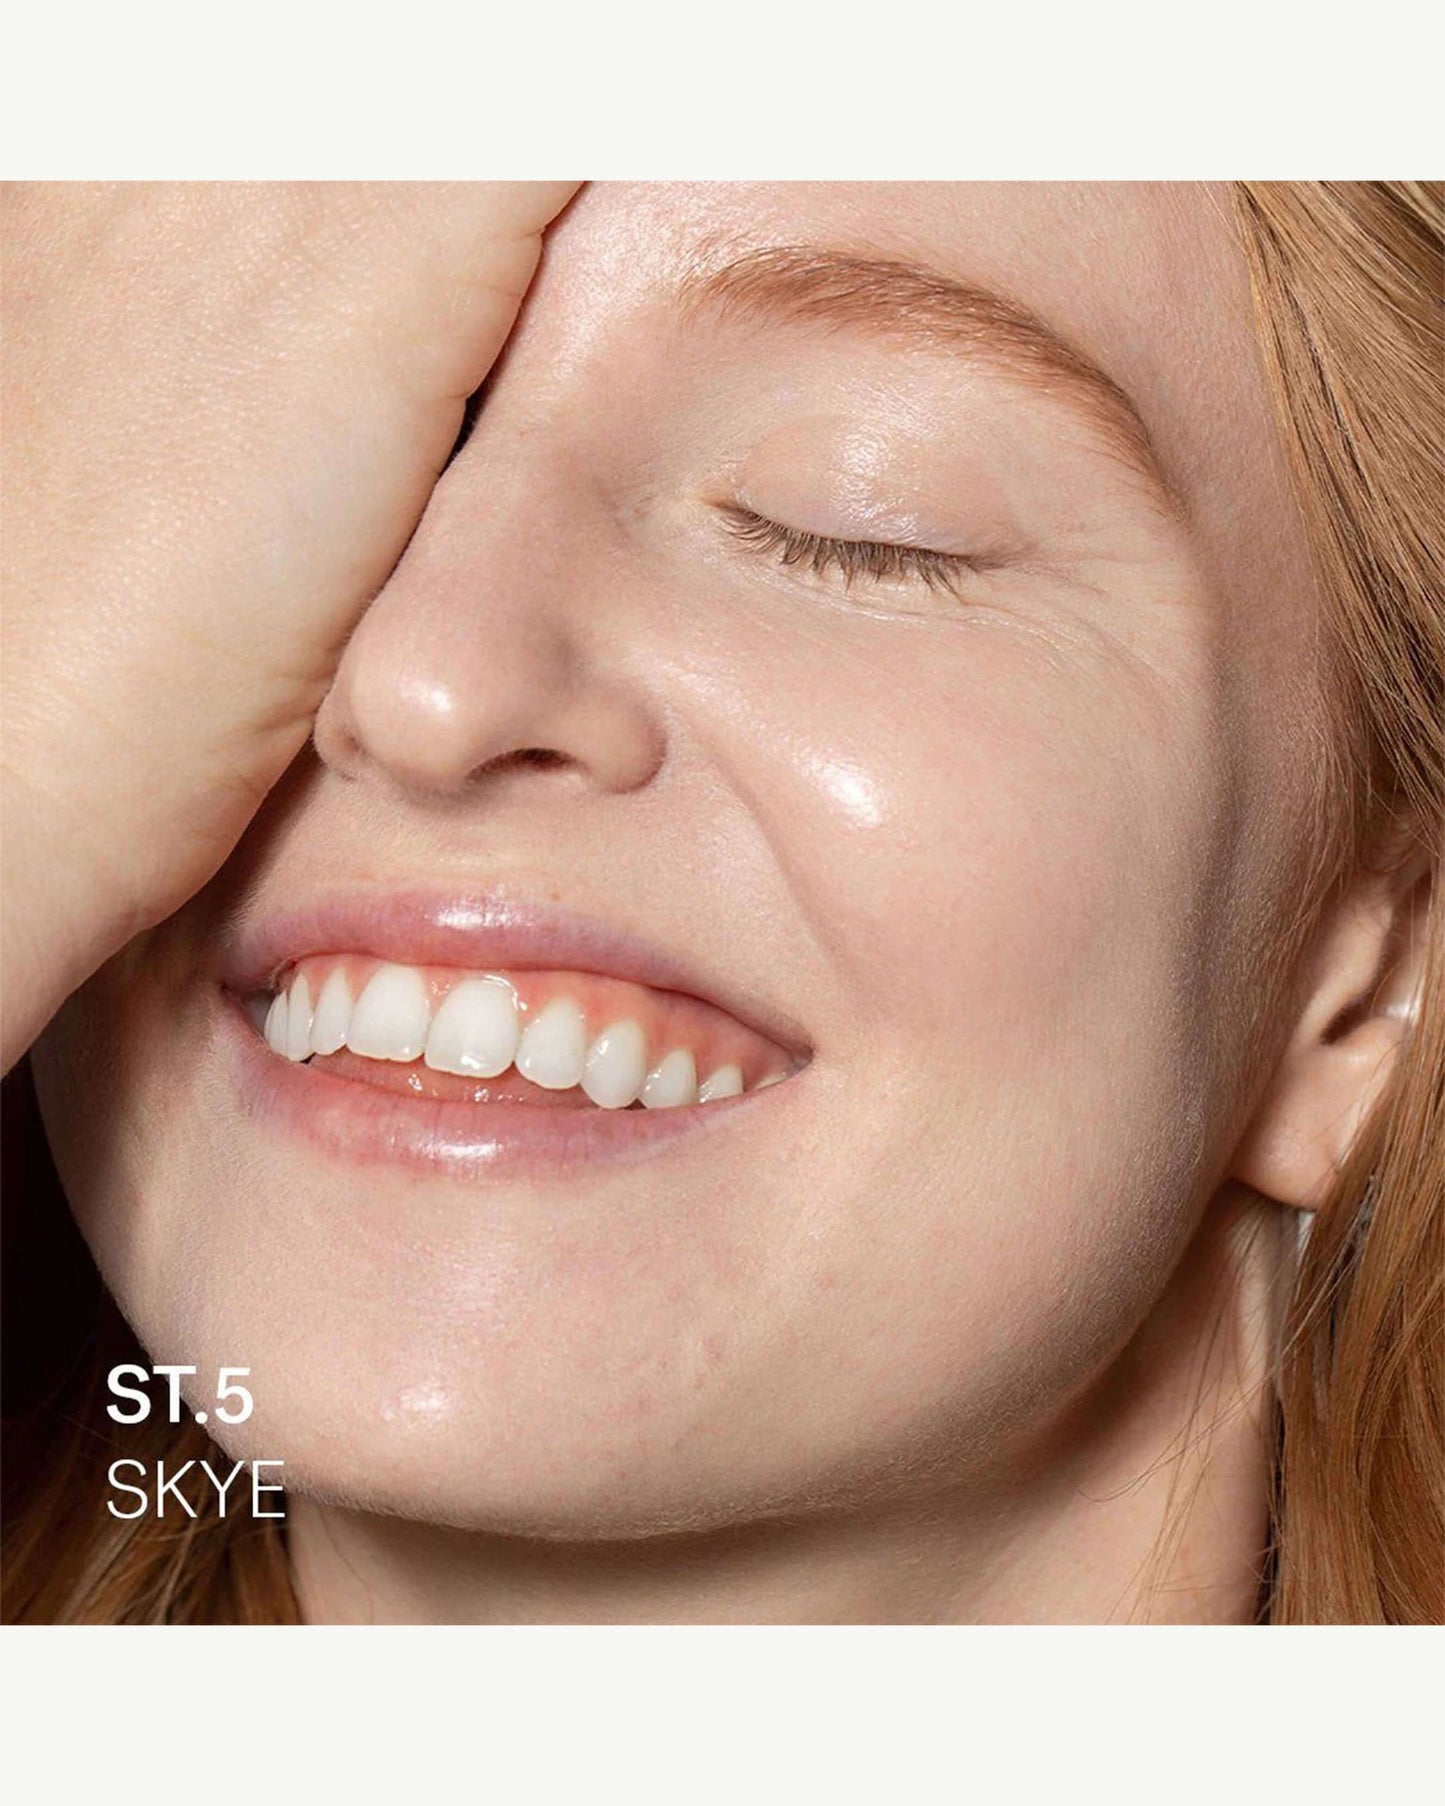  ST0.5 Skye (for very fair skin with neutral undertones)